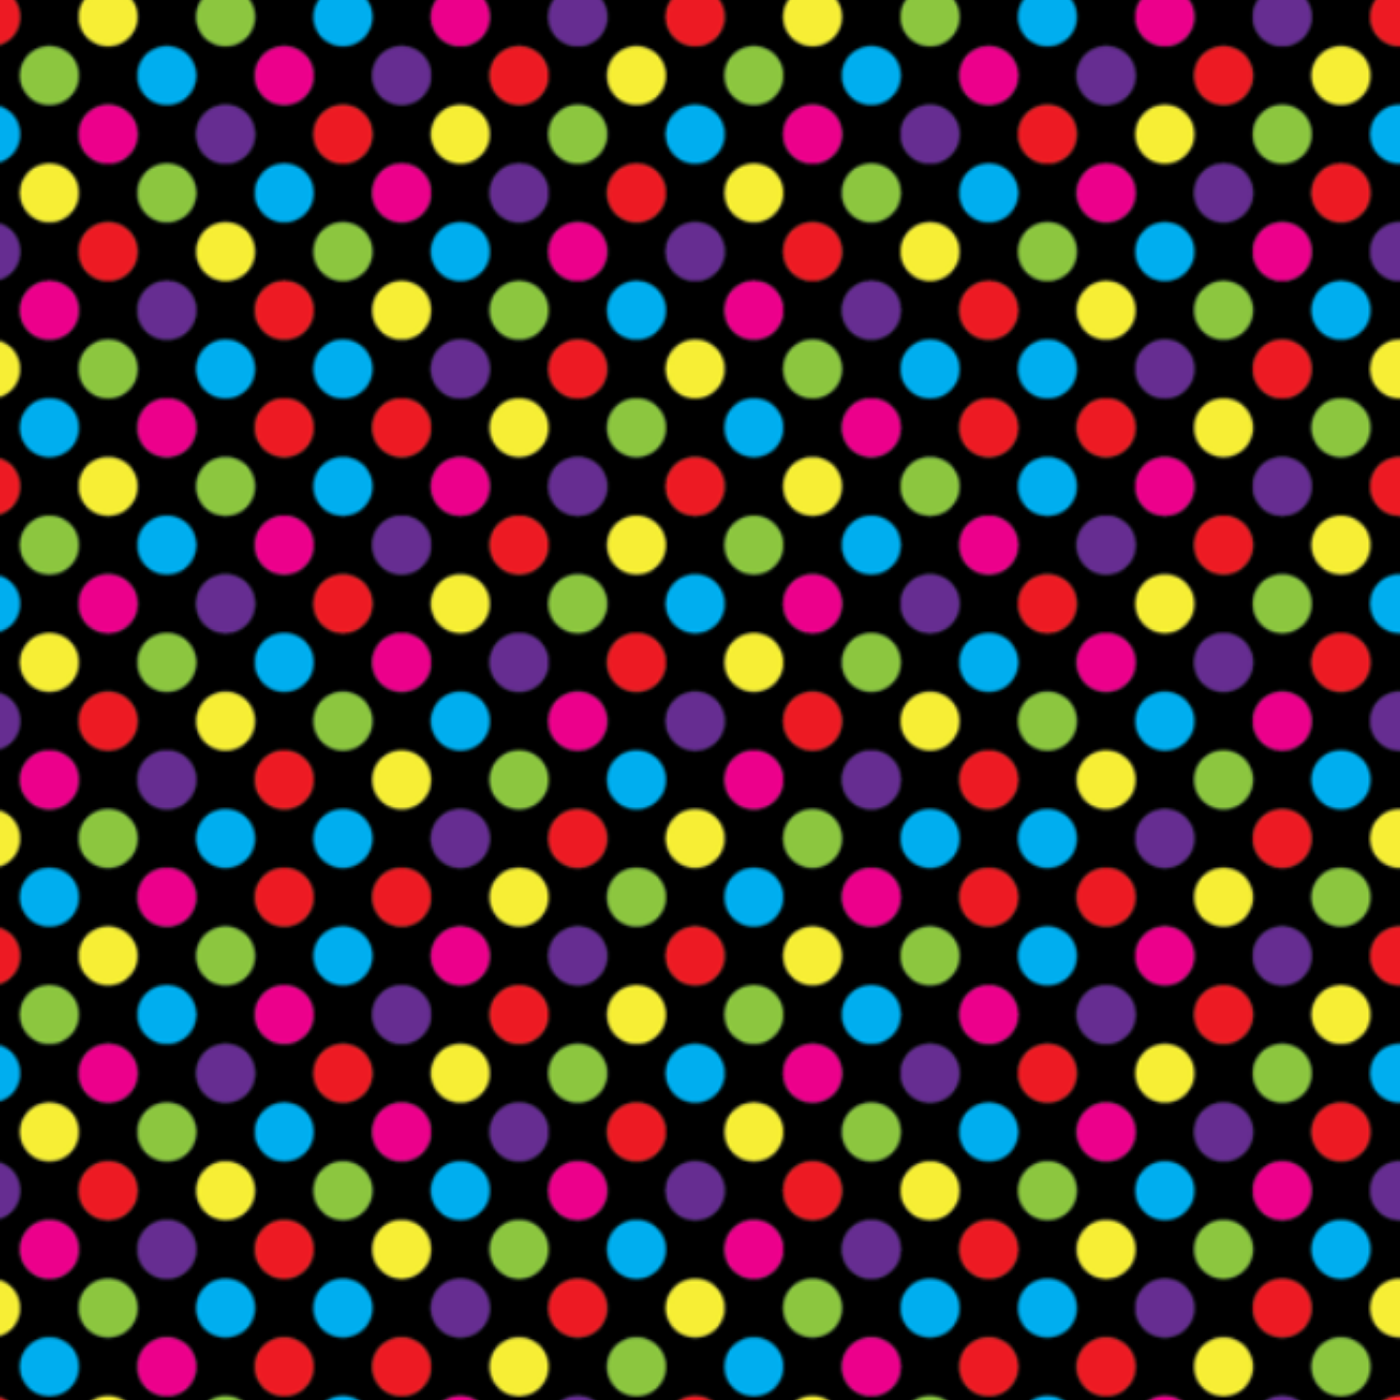 Confetti-Rainbow-Colours-Polka-Dots-Stripes-Vibrant-Vintage-Inspired-RainbowsAndFairies.com-CONFT_ORG-Pic_01